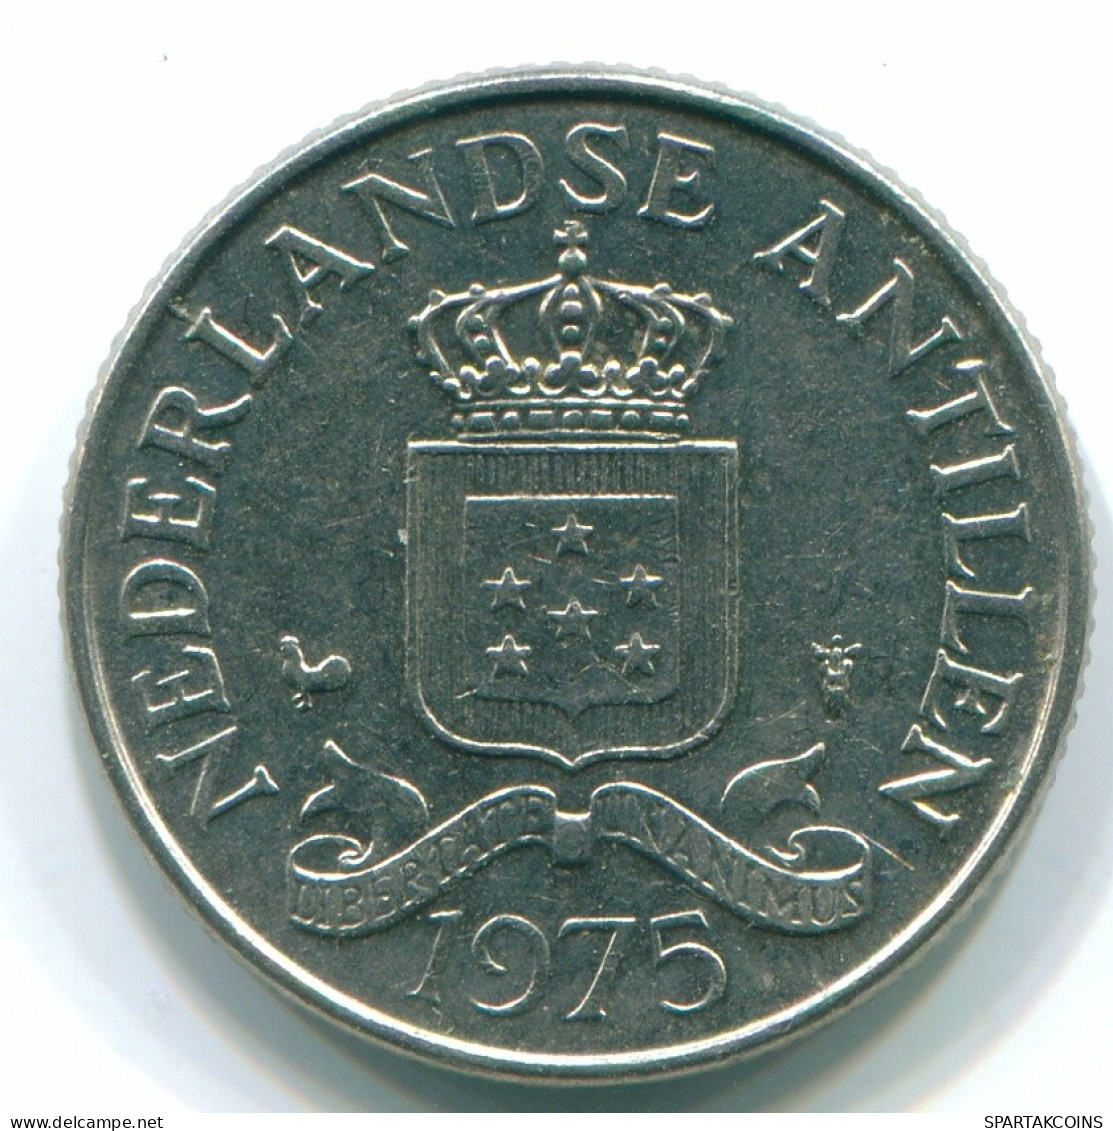 25 CENTS 1975 NETHERLANDS ANTILLES Nickel Colonial Coin #S11609.U.A - Nederlandse Antillen